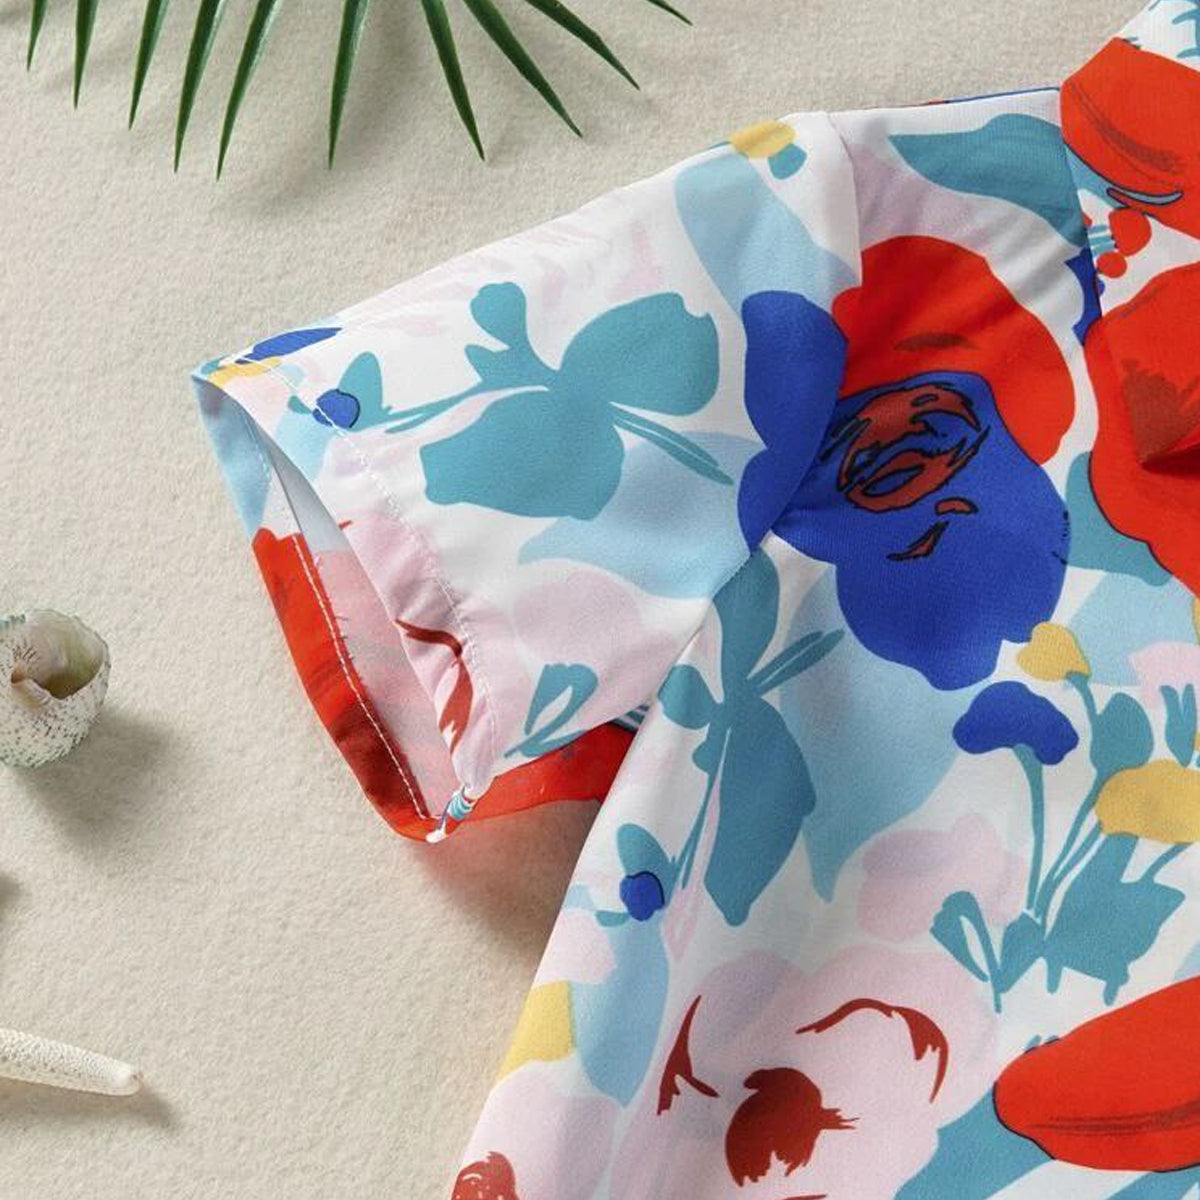 VENUTALOZA Toddler Boys Stylish Floral Allover & Button Front Shirt For Boy.